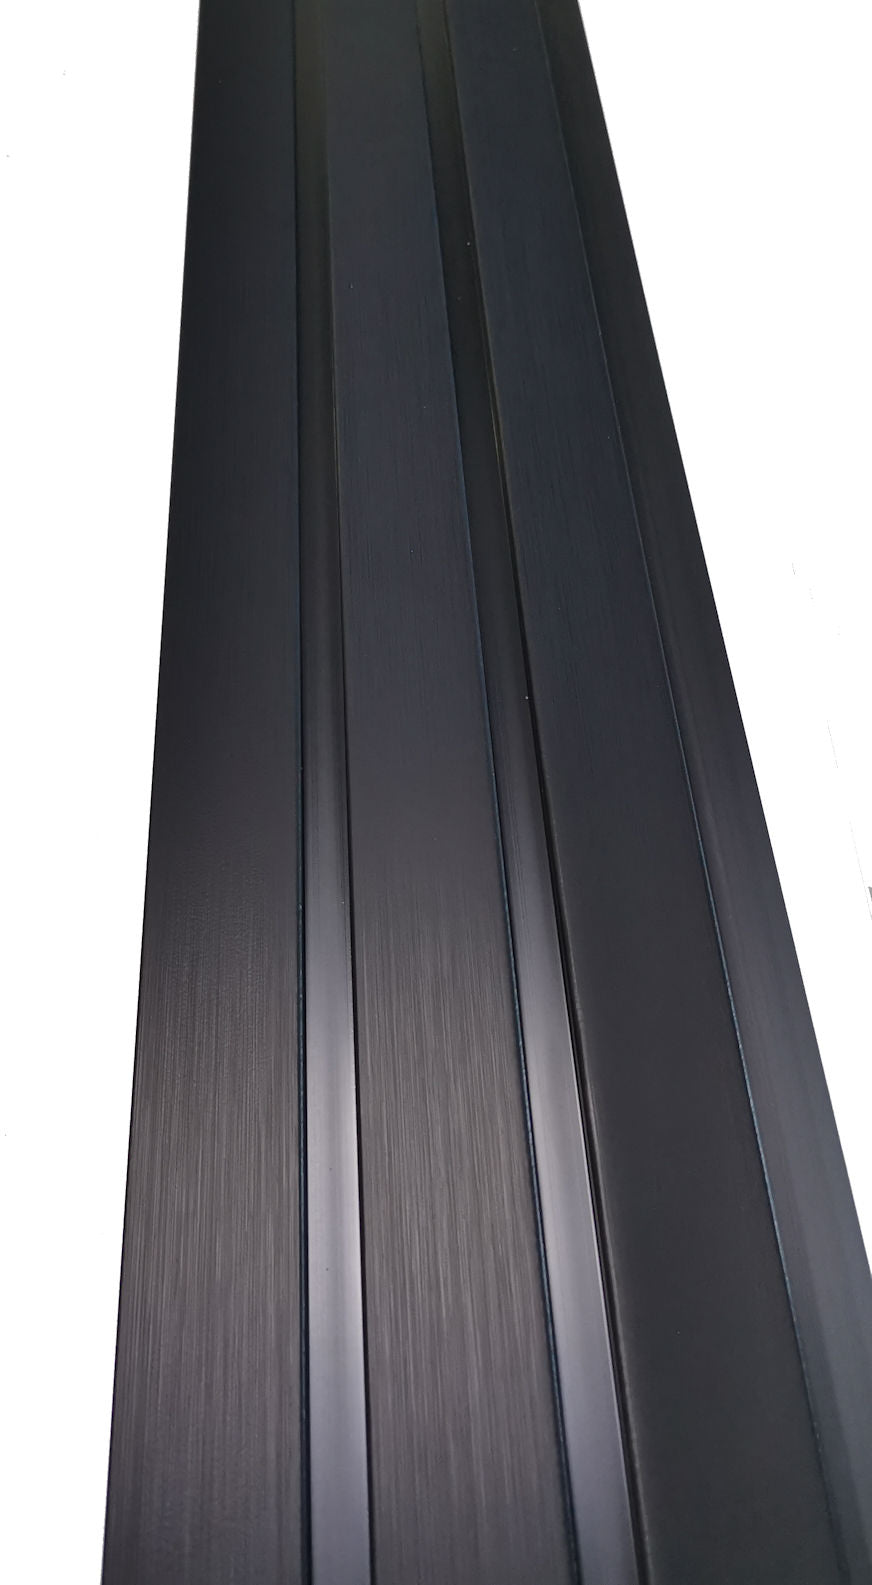 Slimline Wide Slat Economy polymer wall paneling and cladding